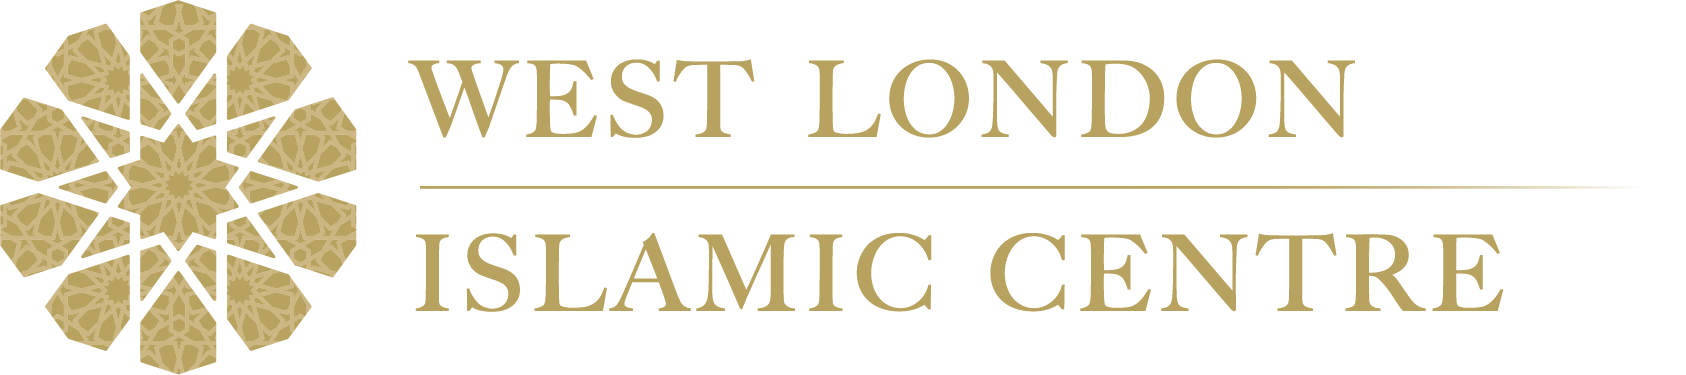 West London Islamic Centre